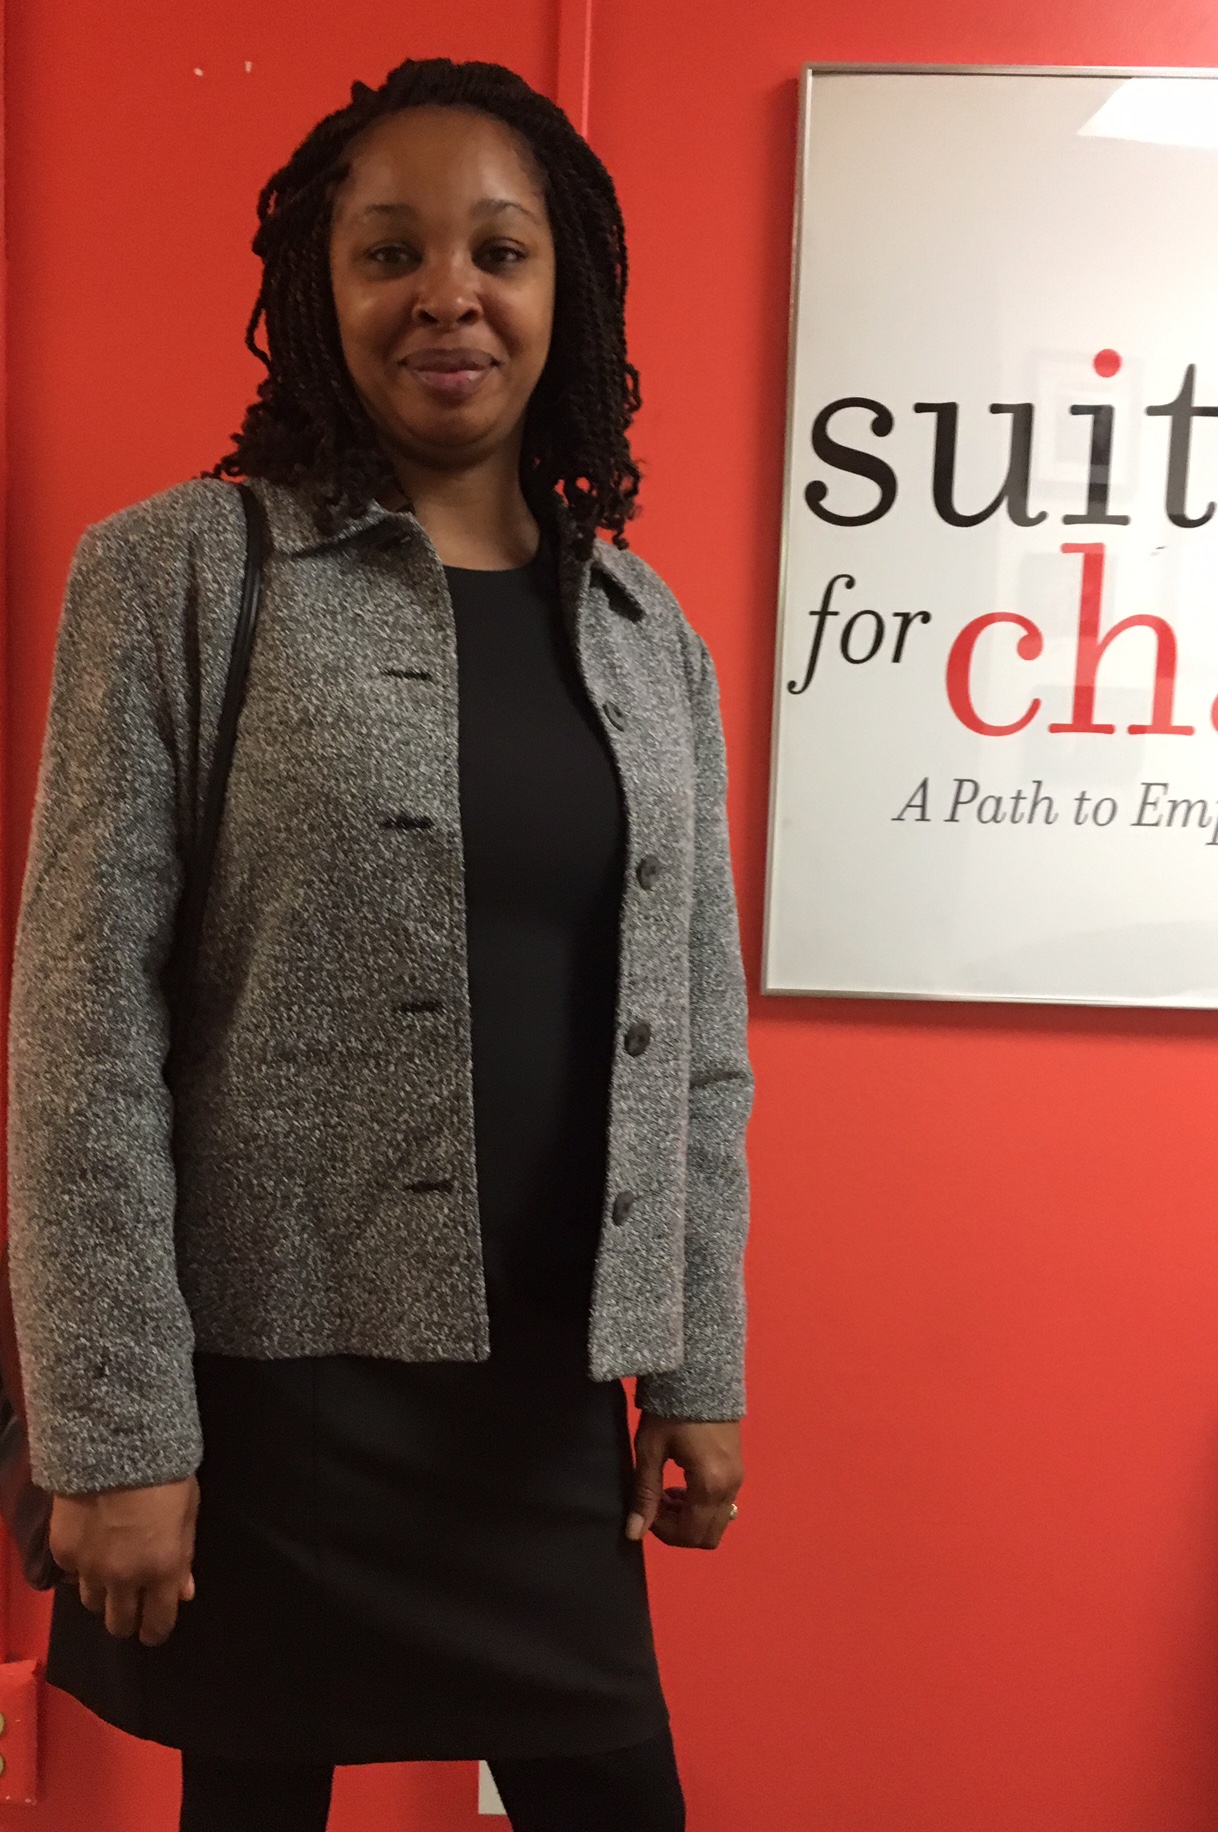 Client at Suited for Change (Washington, D.C.)